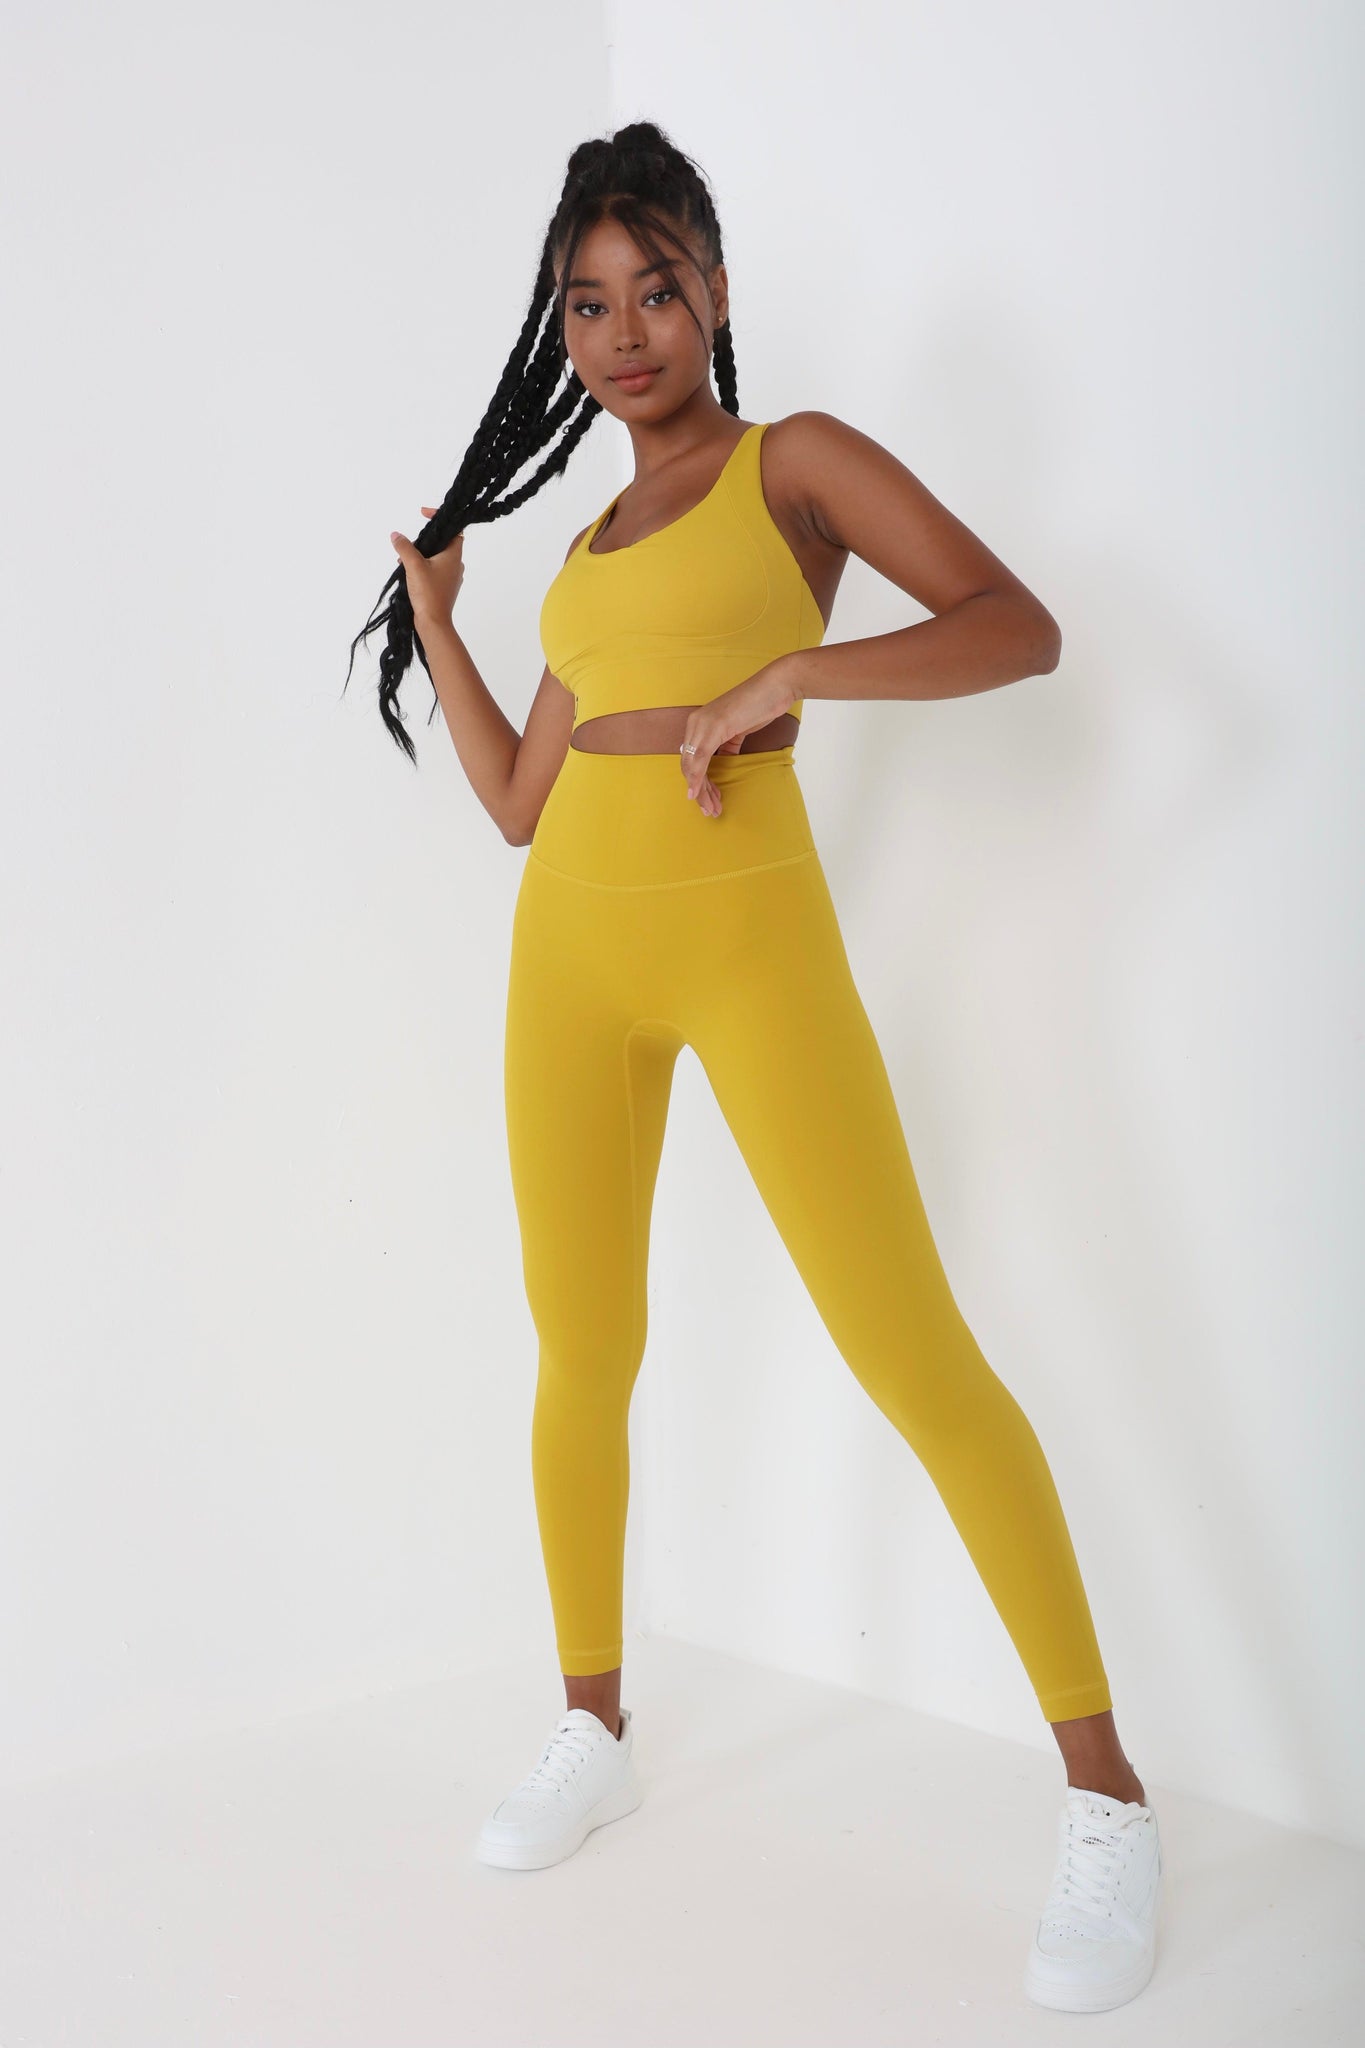 JUV fresh legging in mustard color, full body front view.